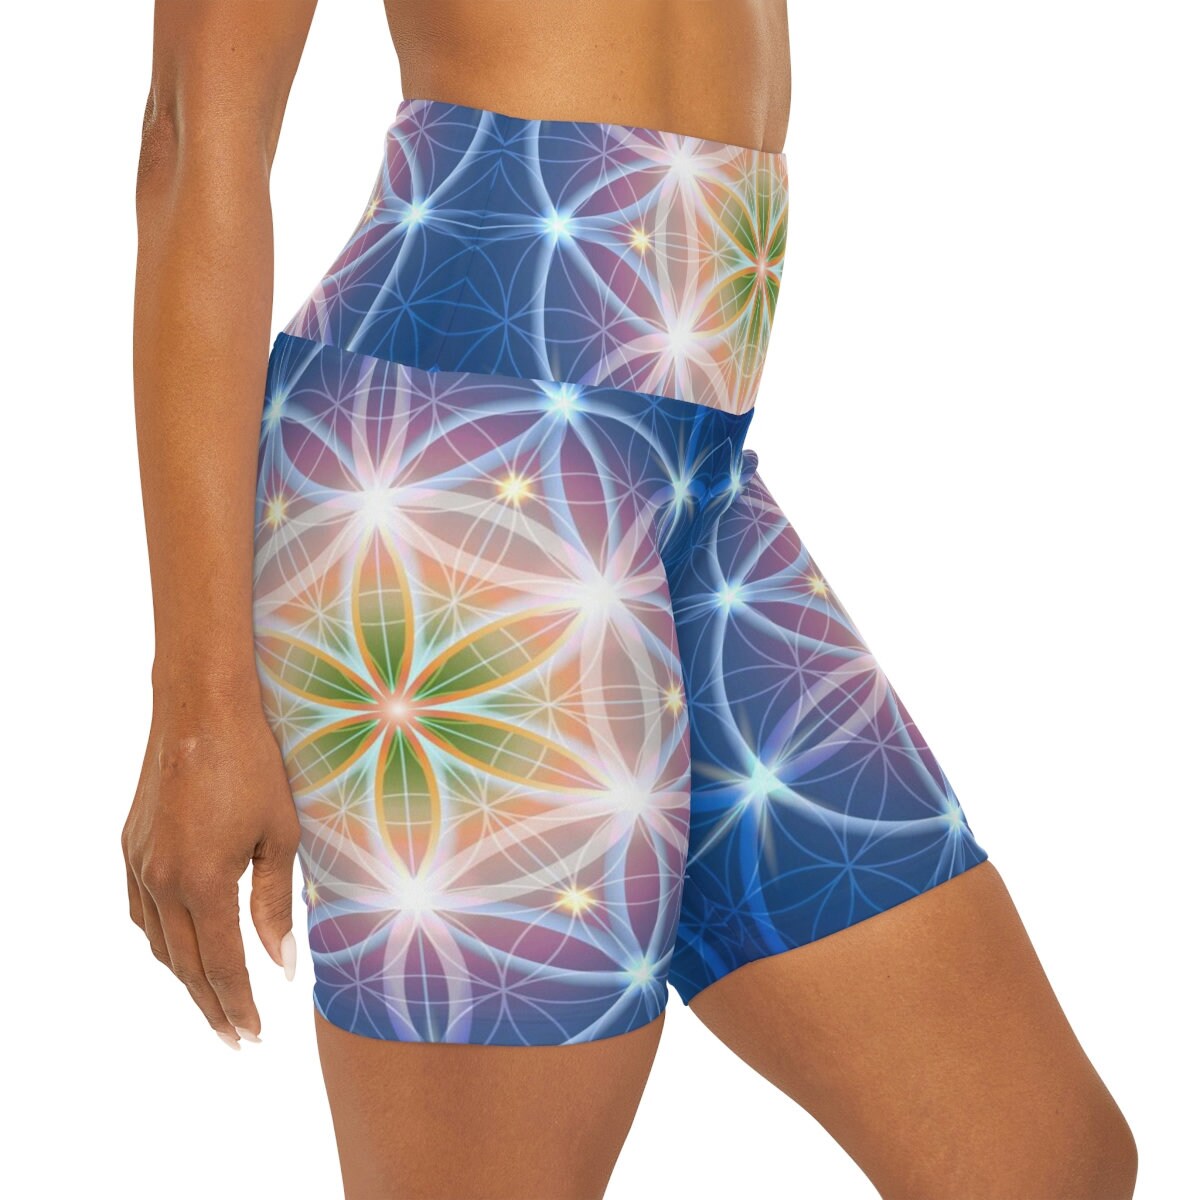 Blue Flower of Life yoga pants sacred geometry legging yoga pants capri ankle length shorts leggings spiritual pants